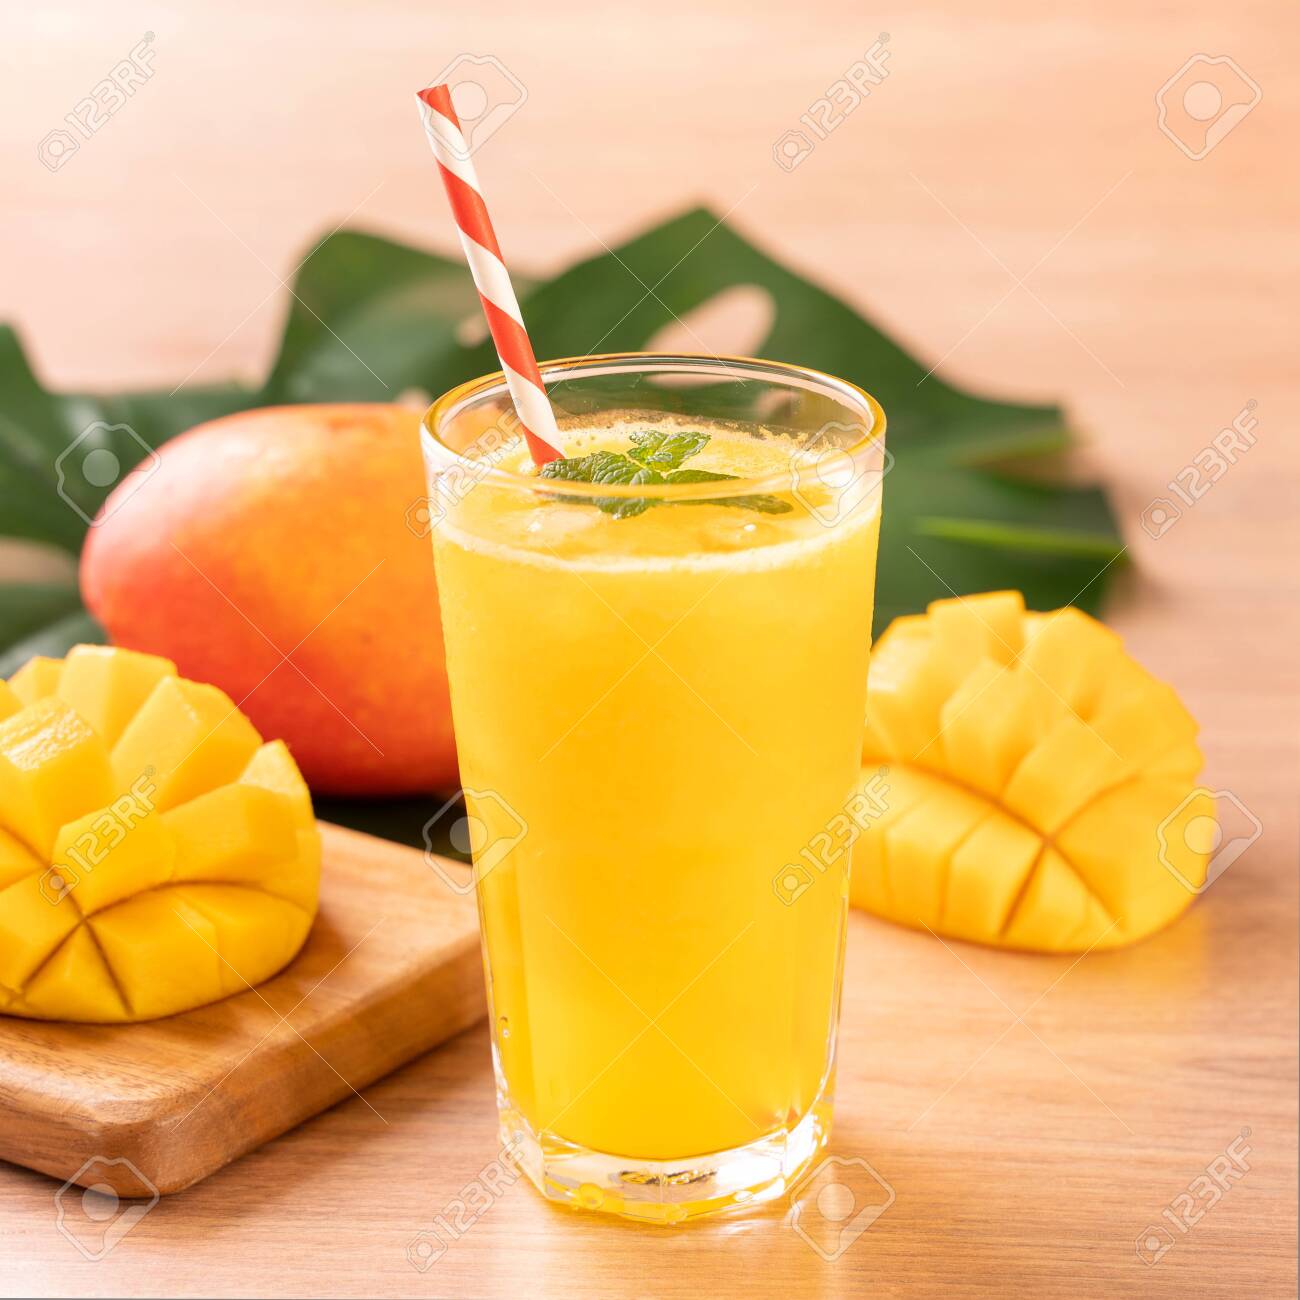 Making Mango Juice In Dumai City